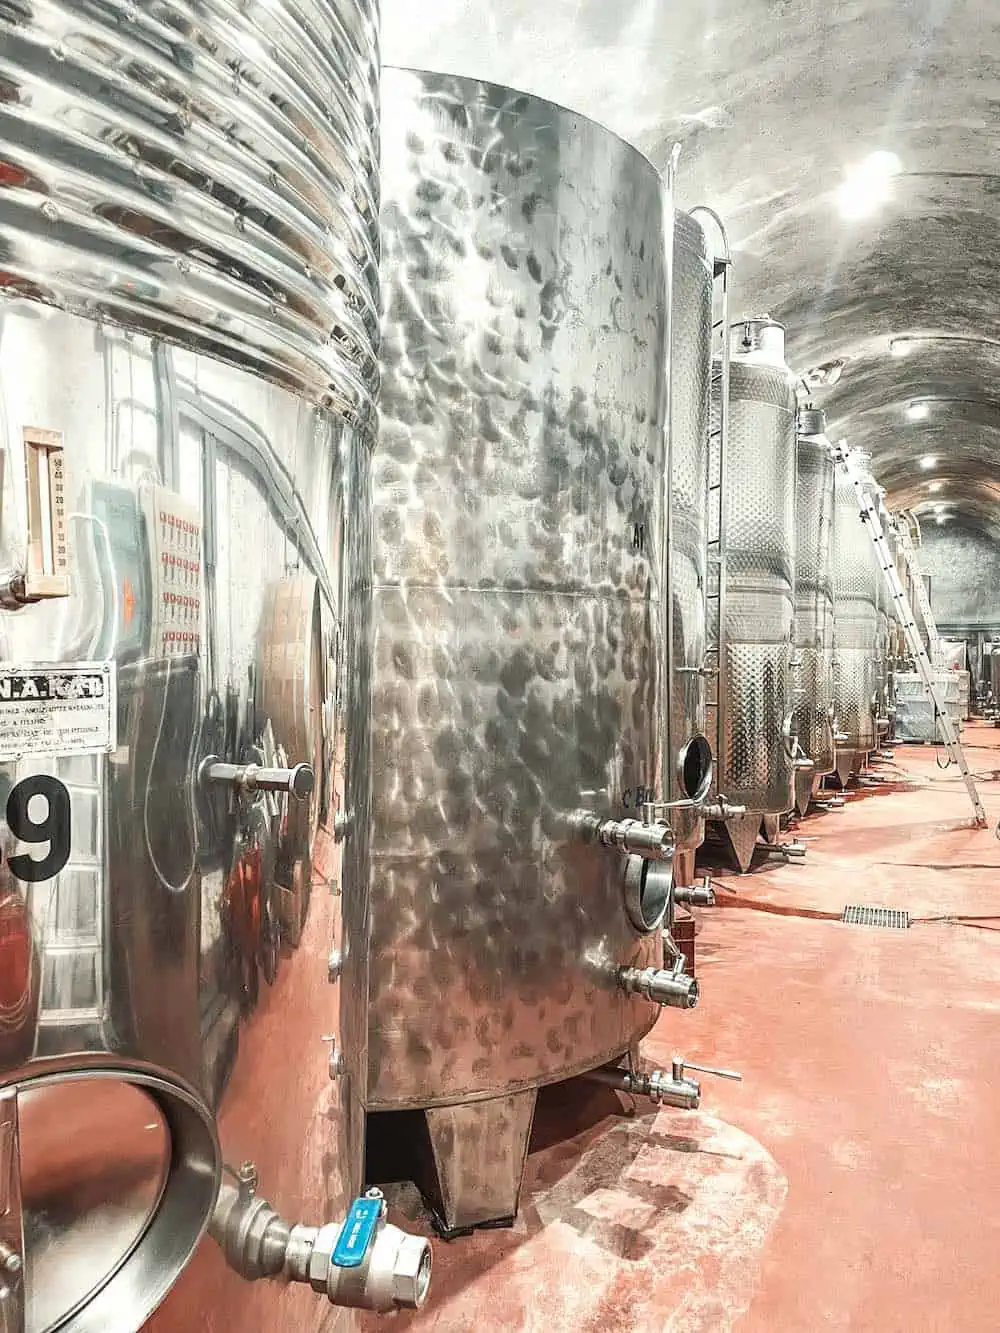 Stainless steel tanks at Hatzidakis Winery. 